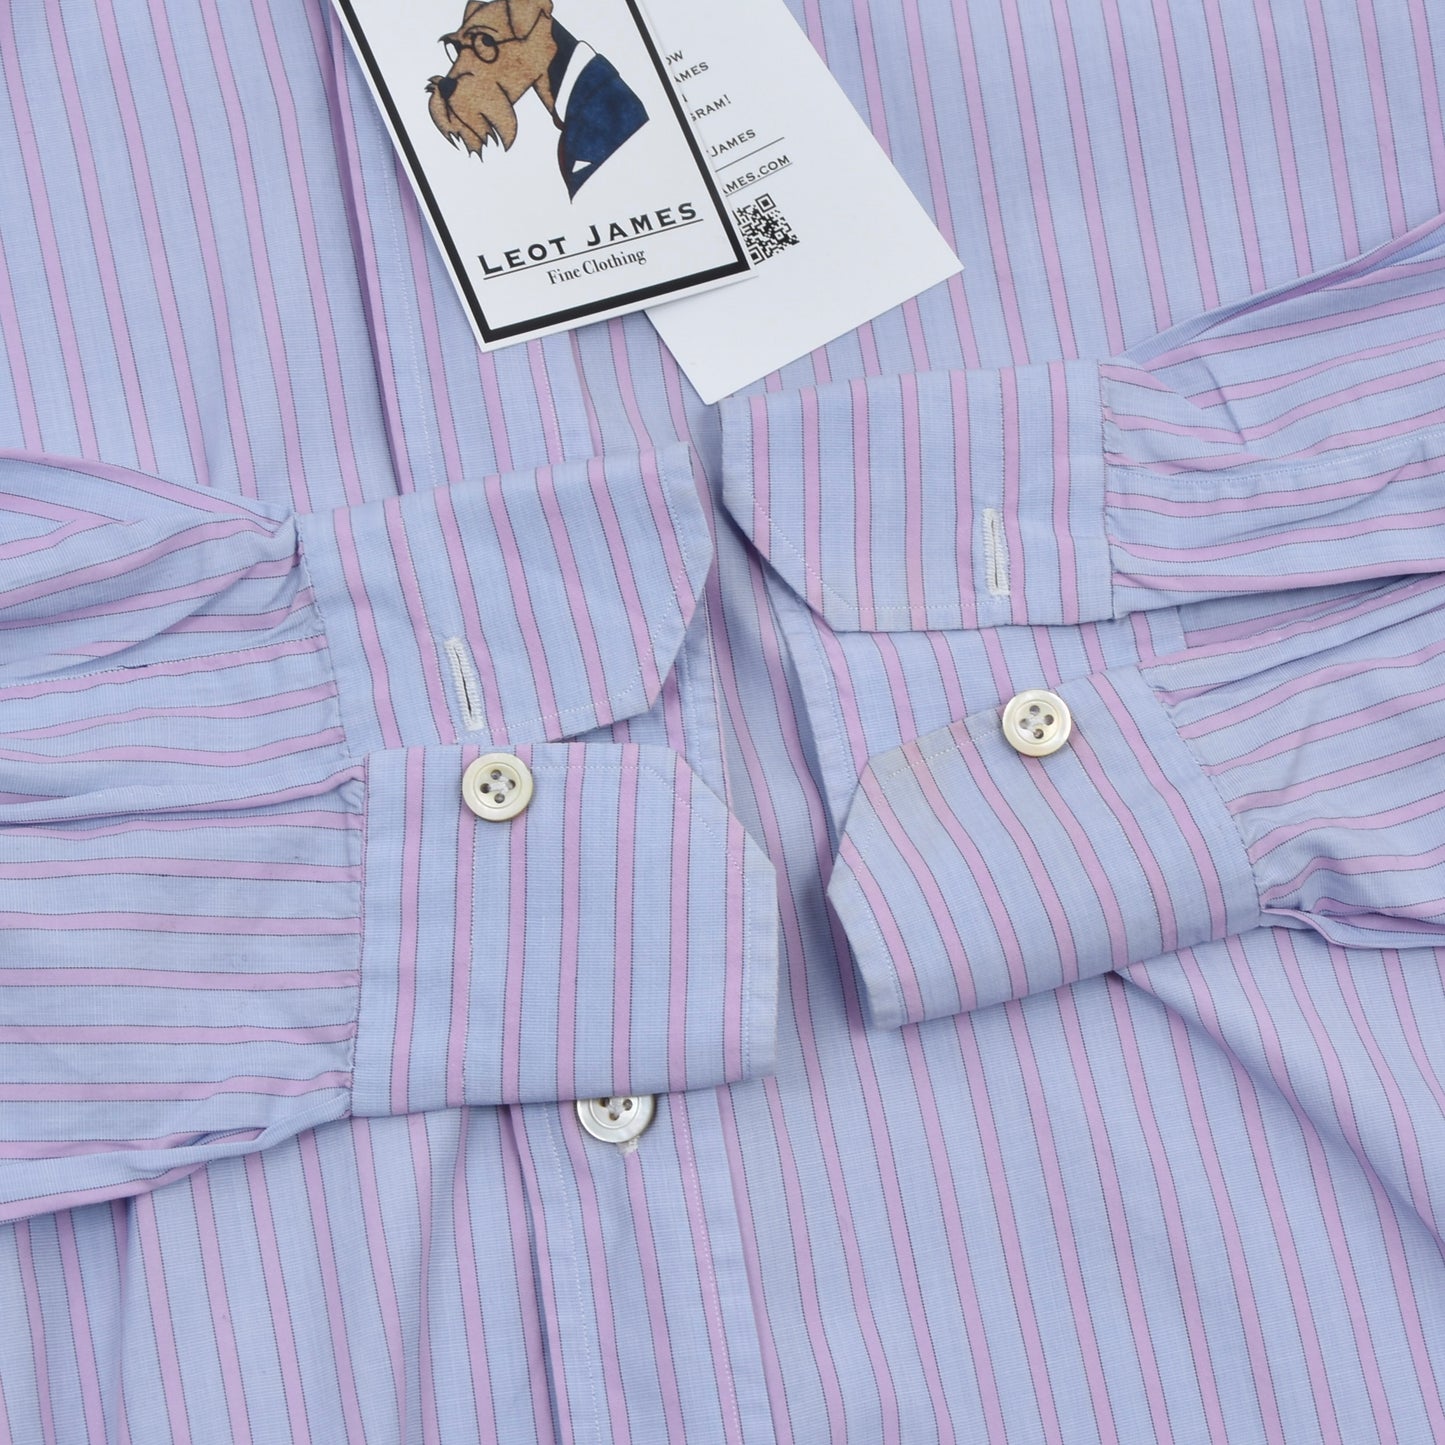 Kiton Napoli Long Sleeve Shirt Shirt Size 39 - Stripes